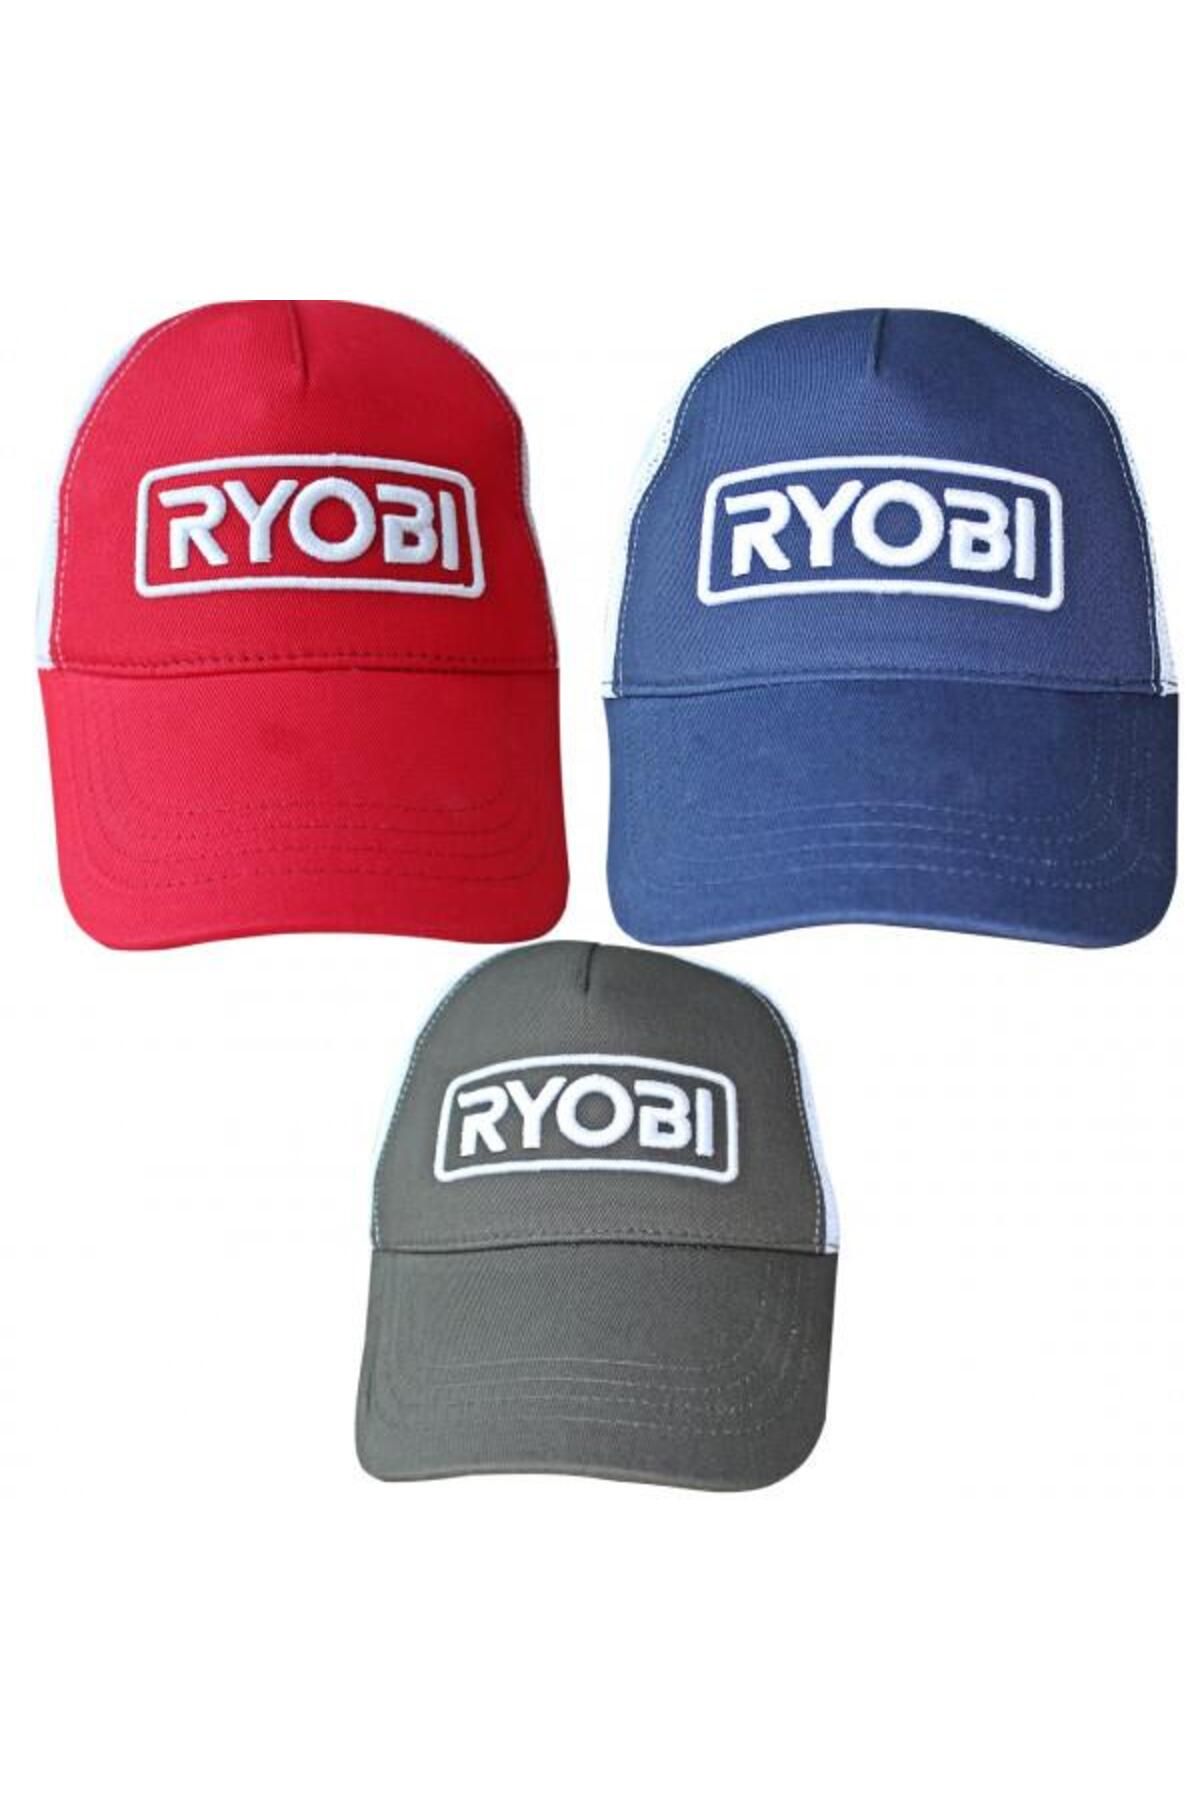 Ryobi Şapka Kırmızı